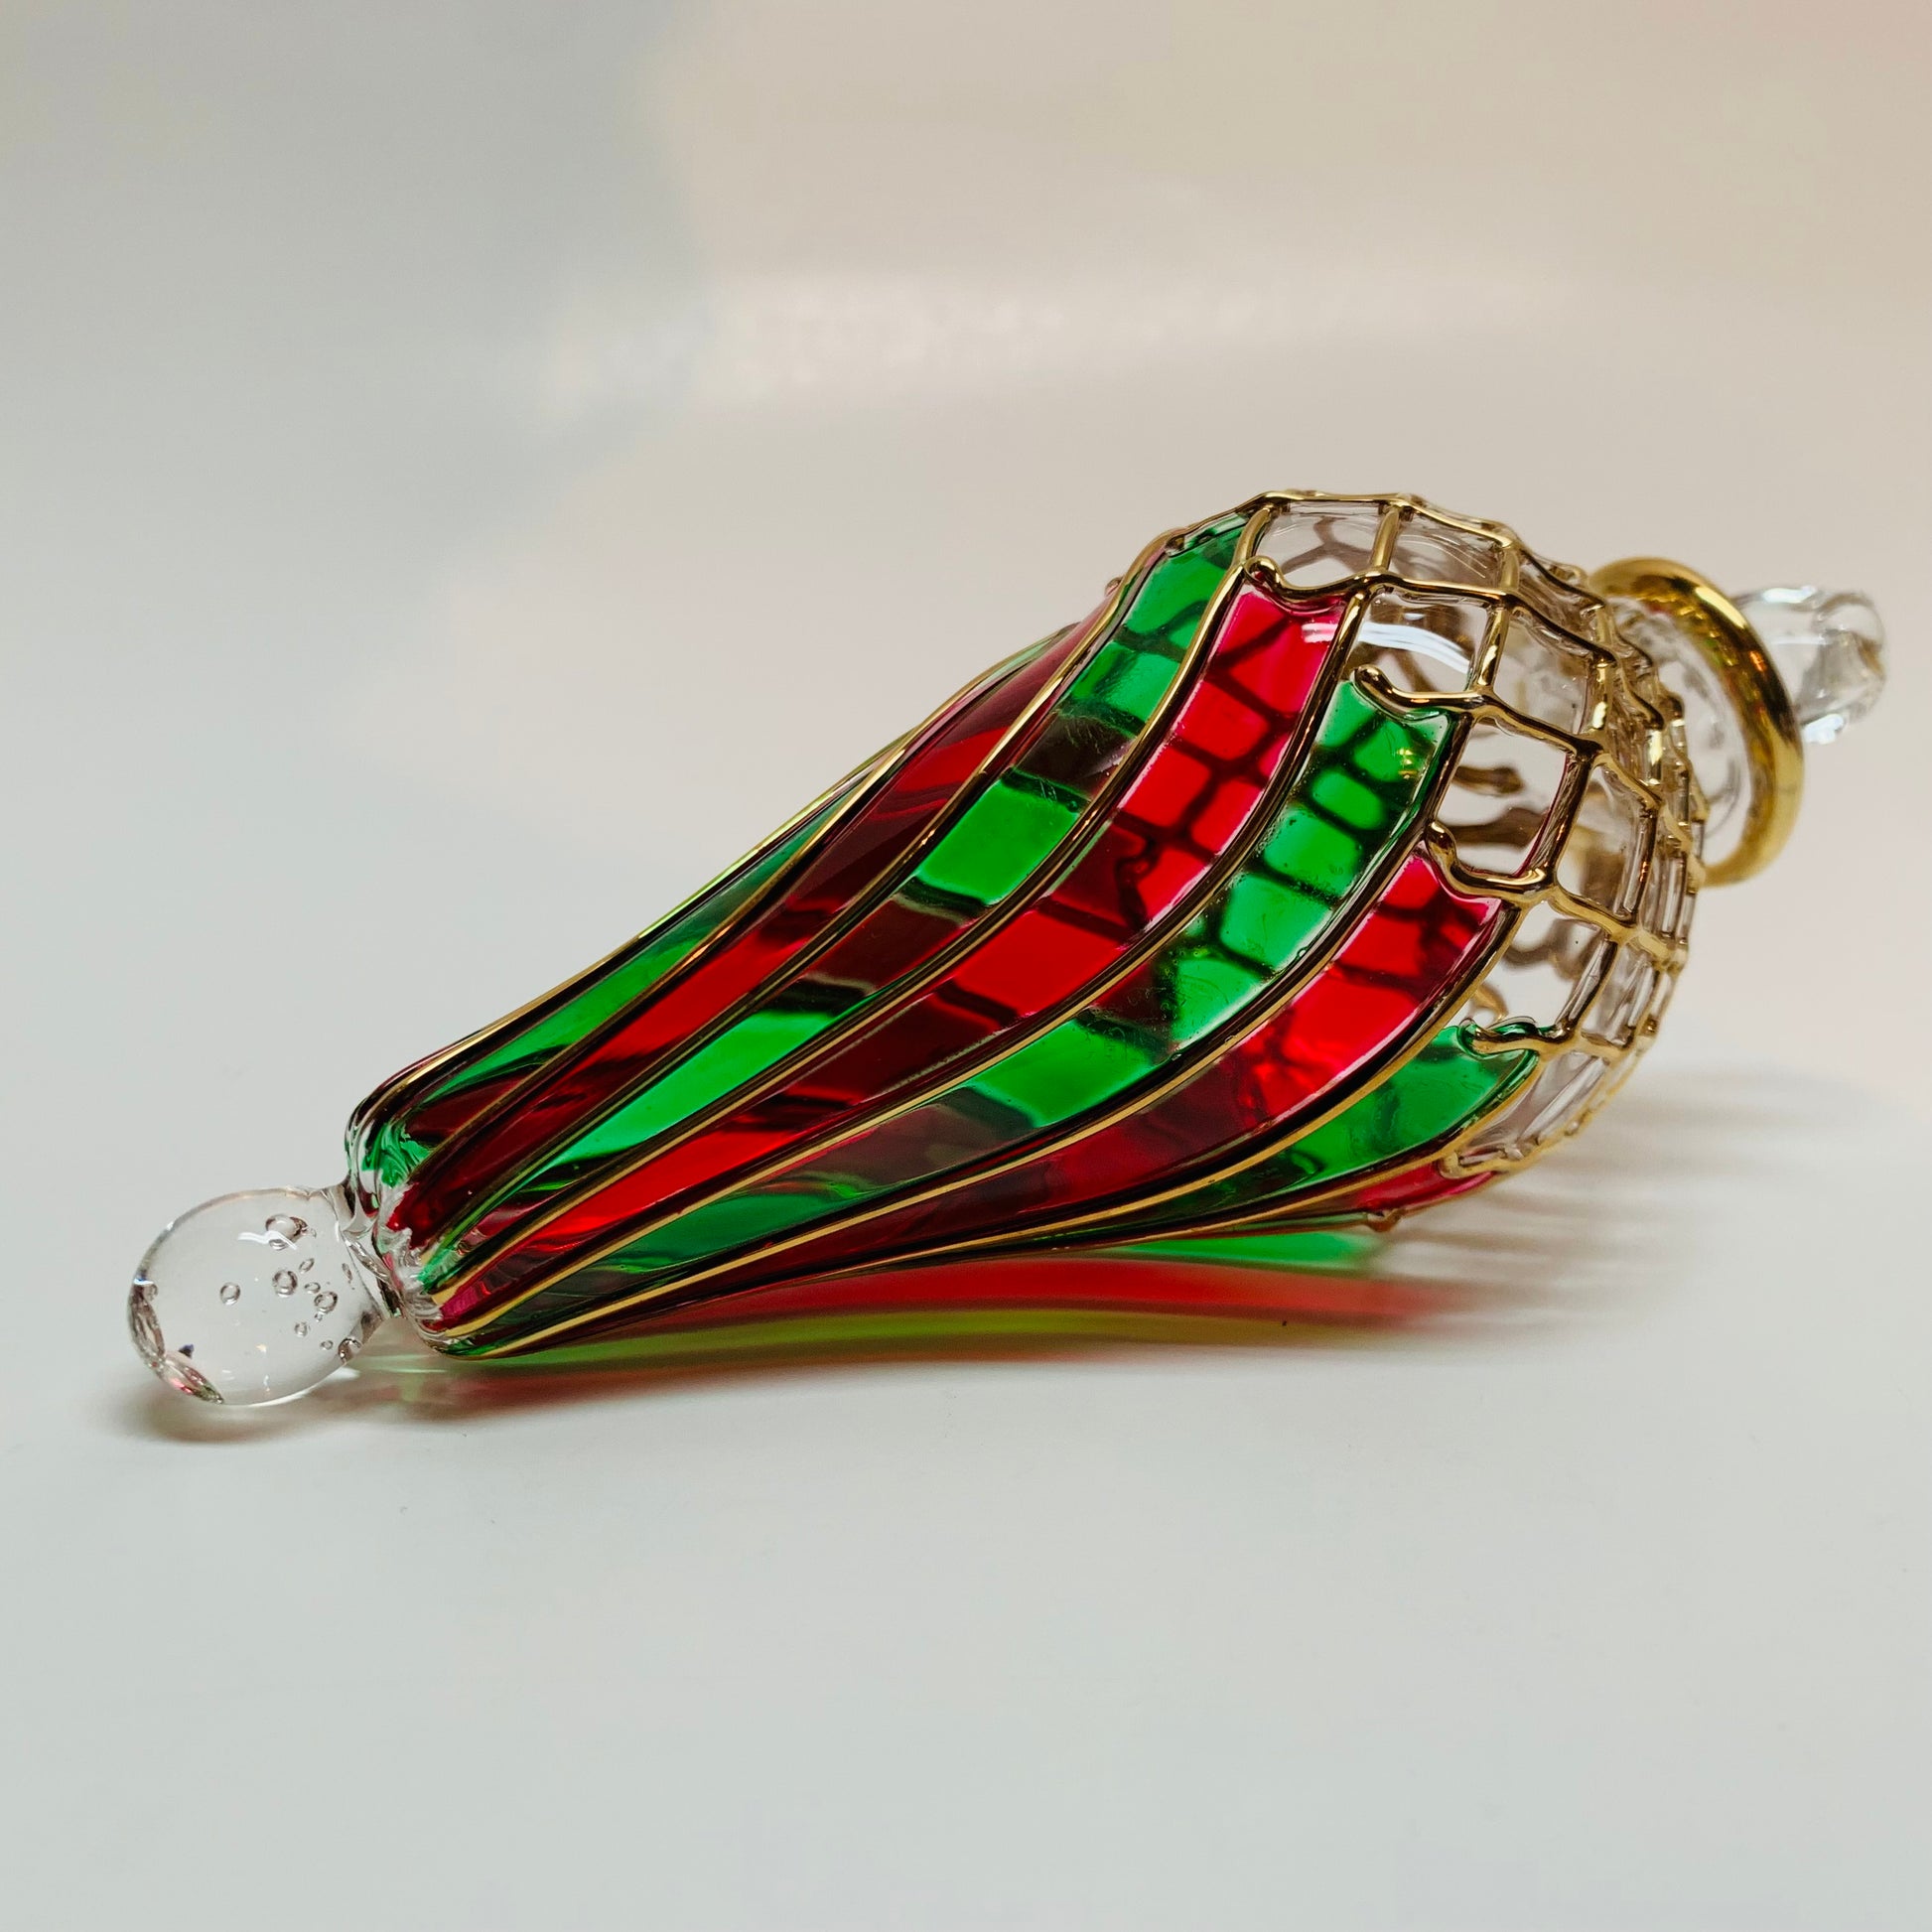 Blown Glass Ornament - Swirl Green & Red